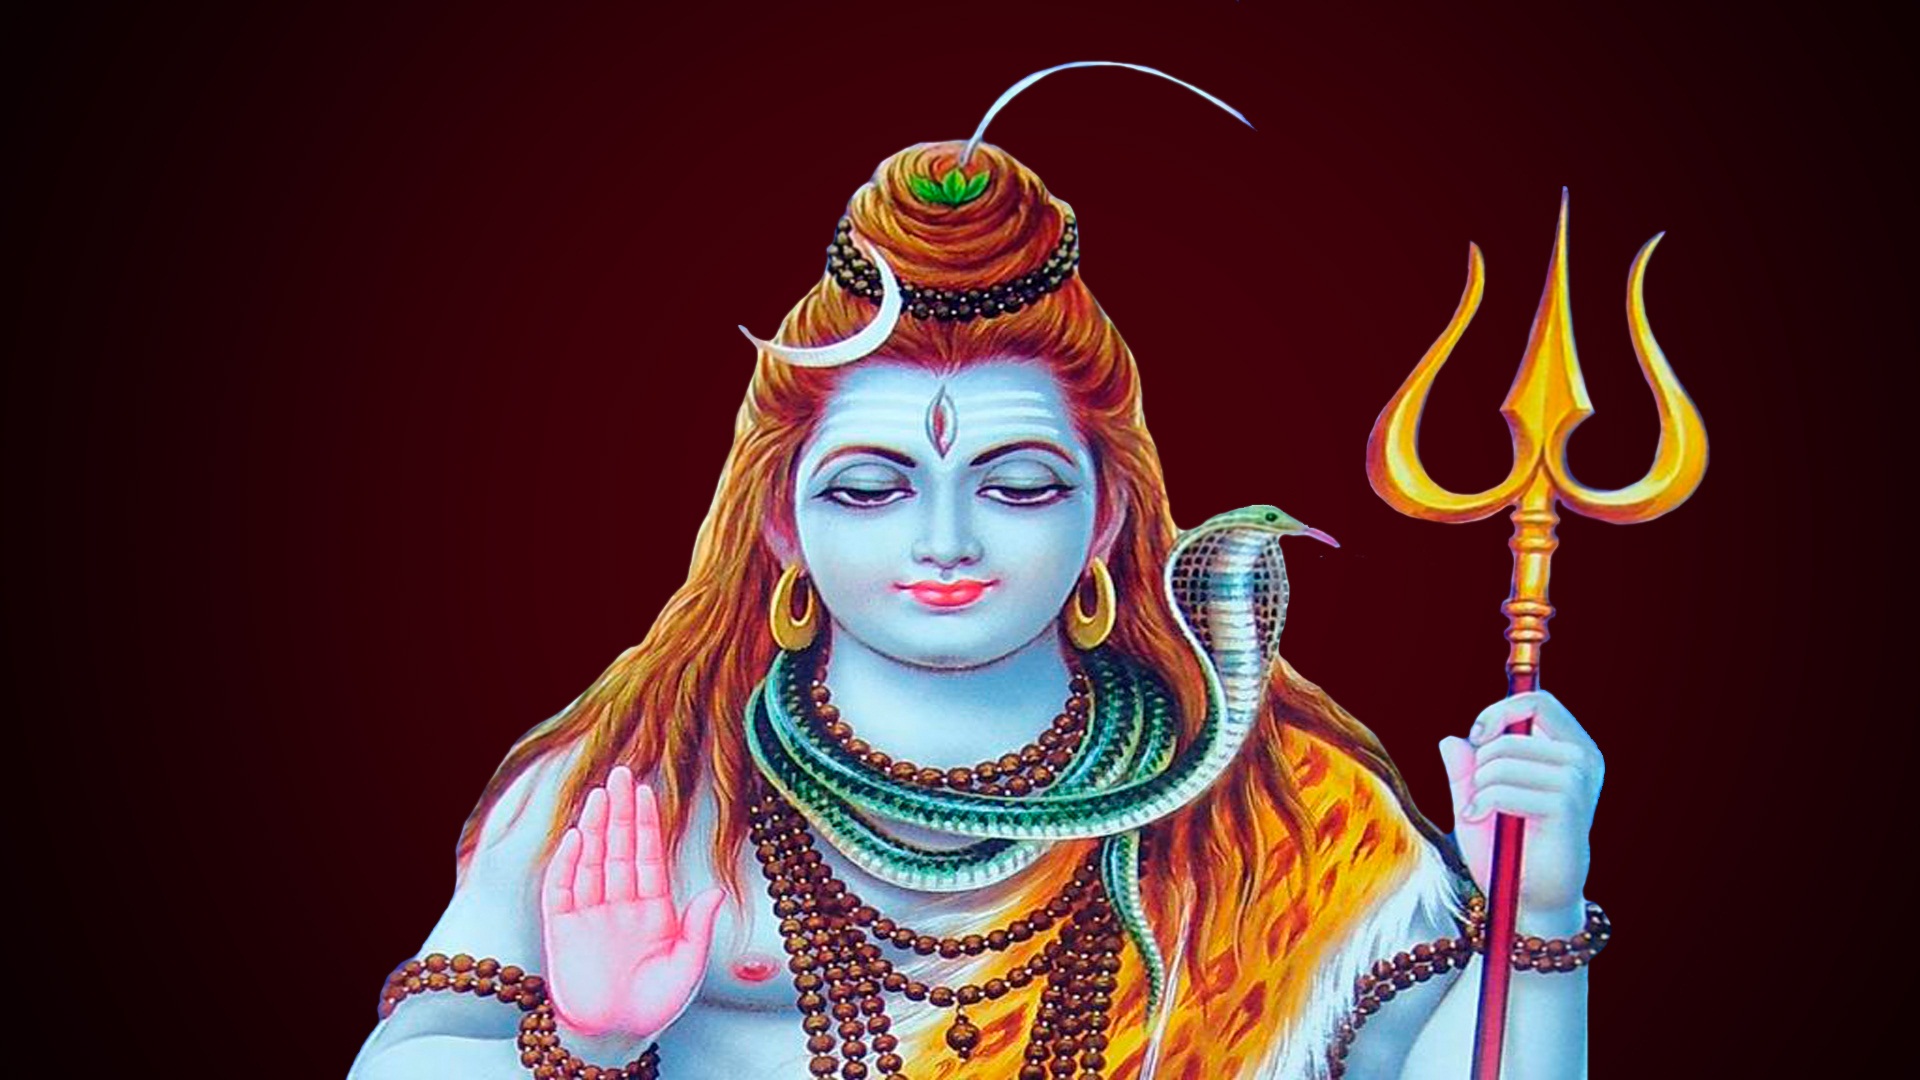 [50+] Lord Shiva Wallpapers HD - WallpaperSafari